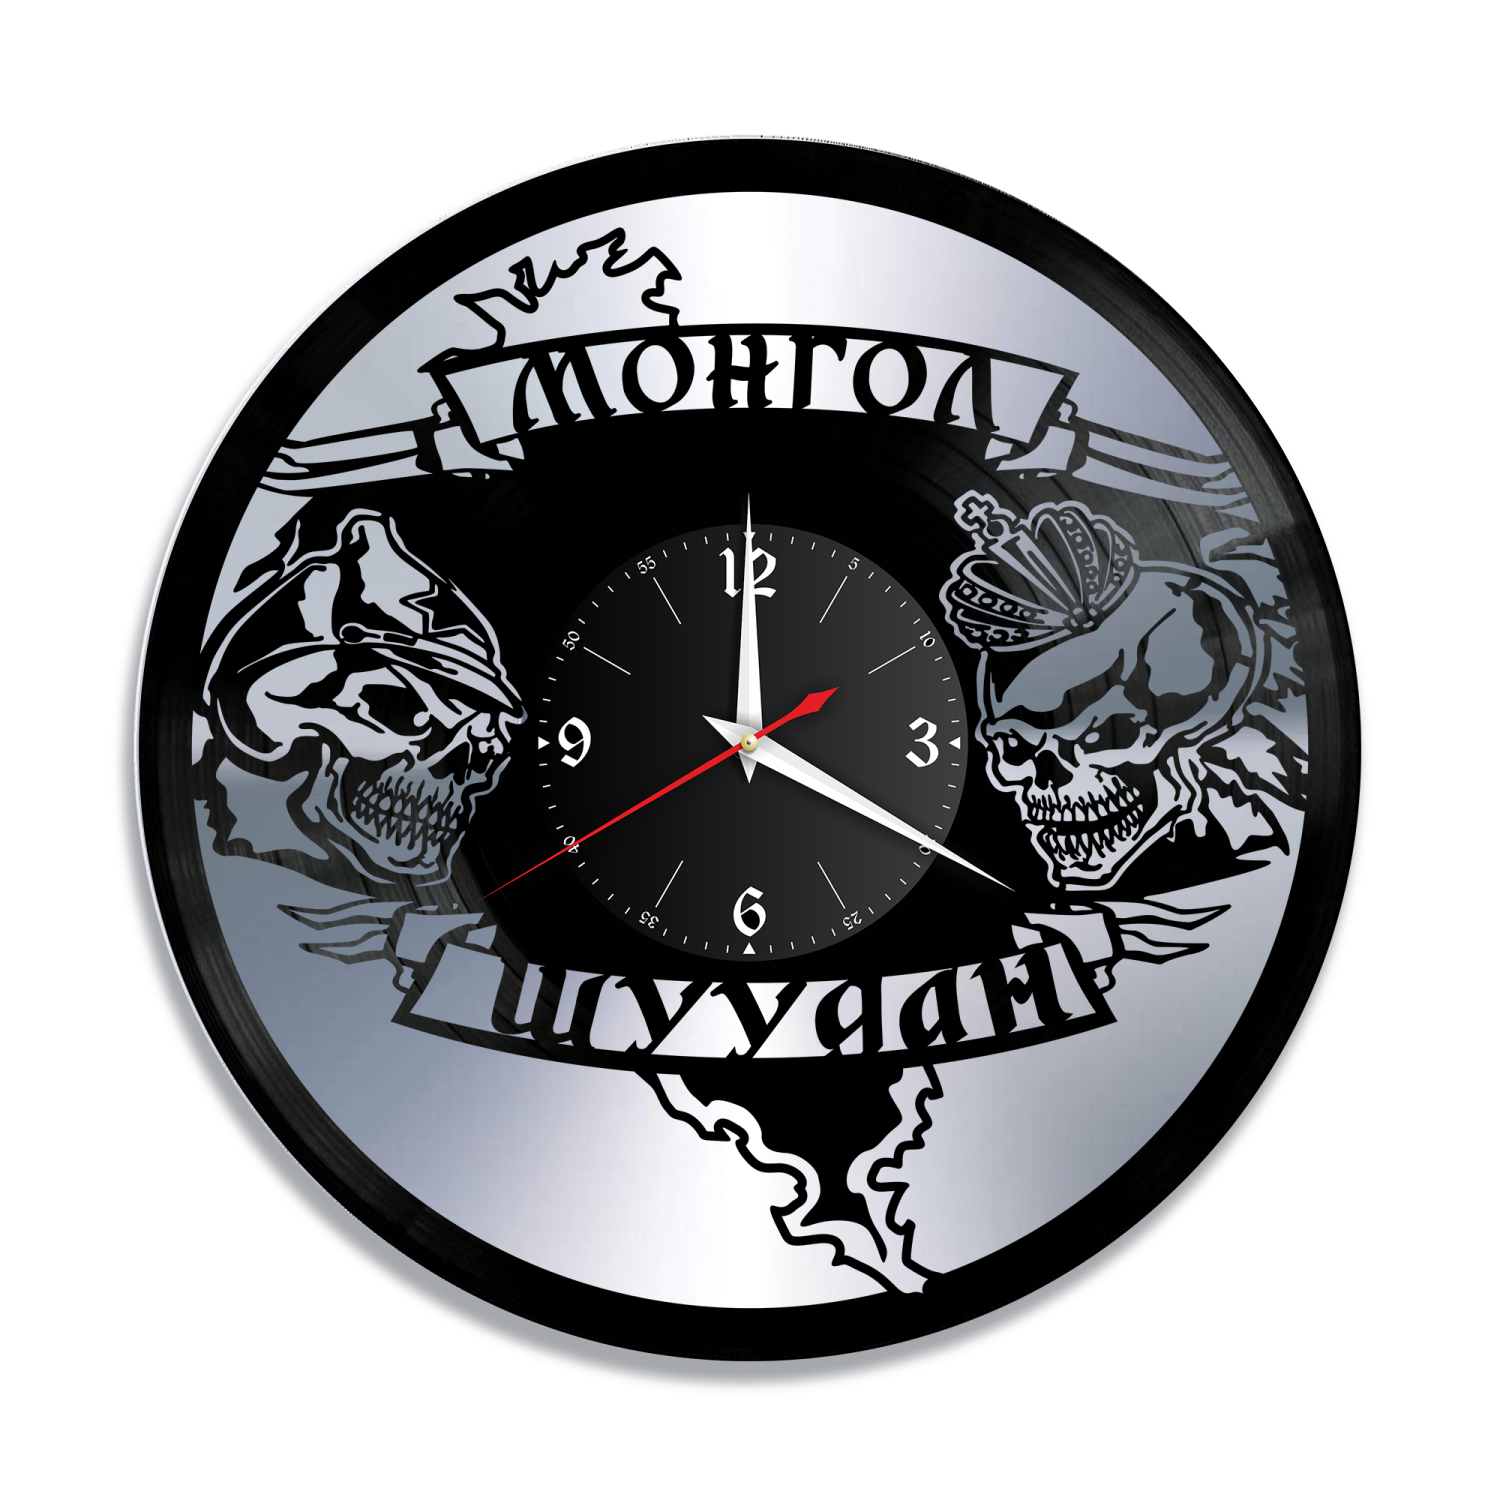 Часы настенные "Группа Монгол Шуудан, серебро" из винила, №R1 VC-12137-2